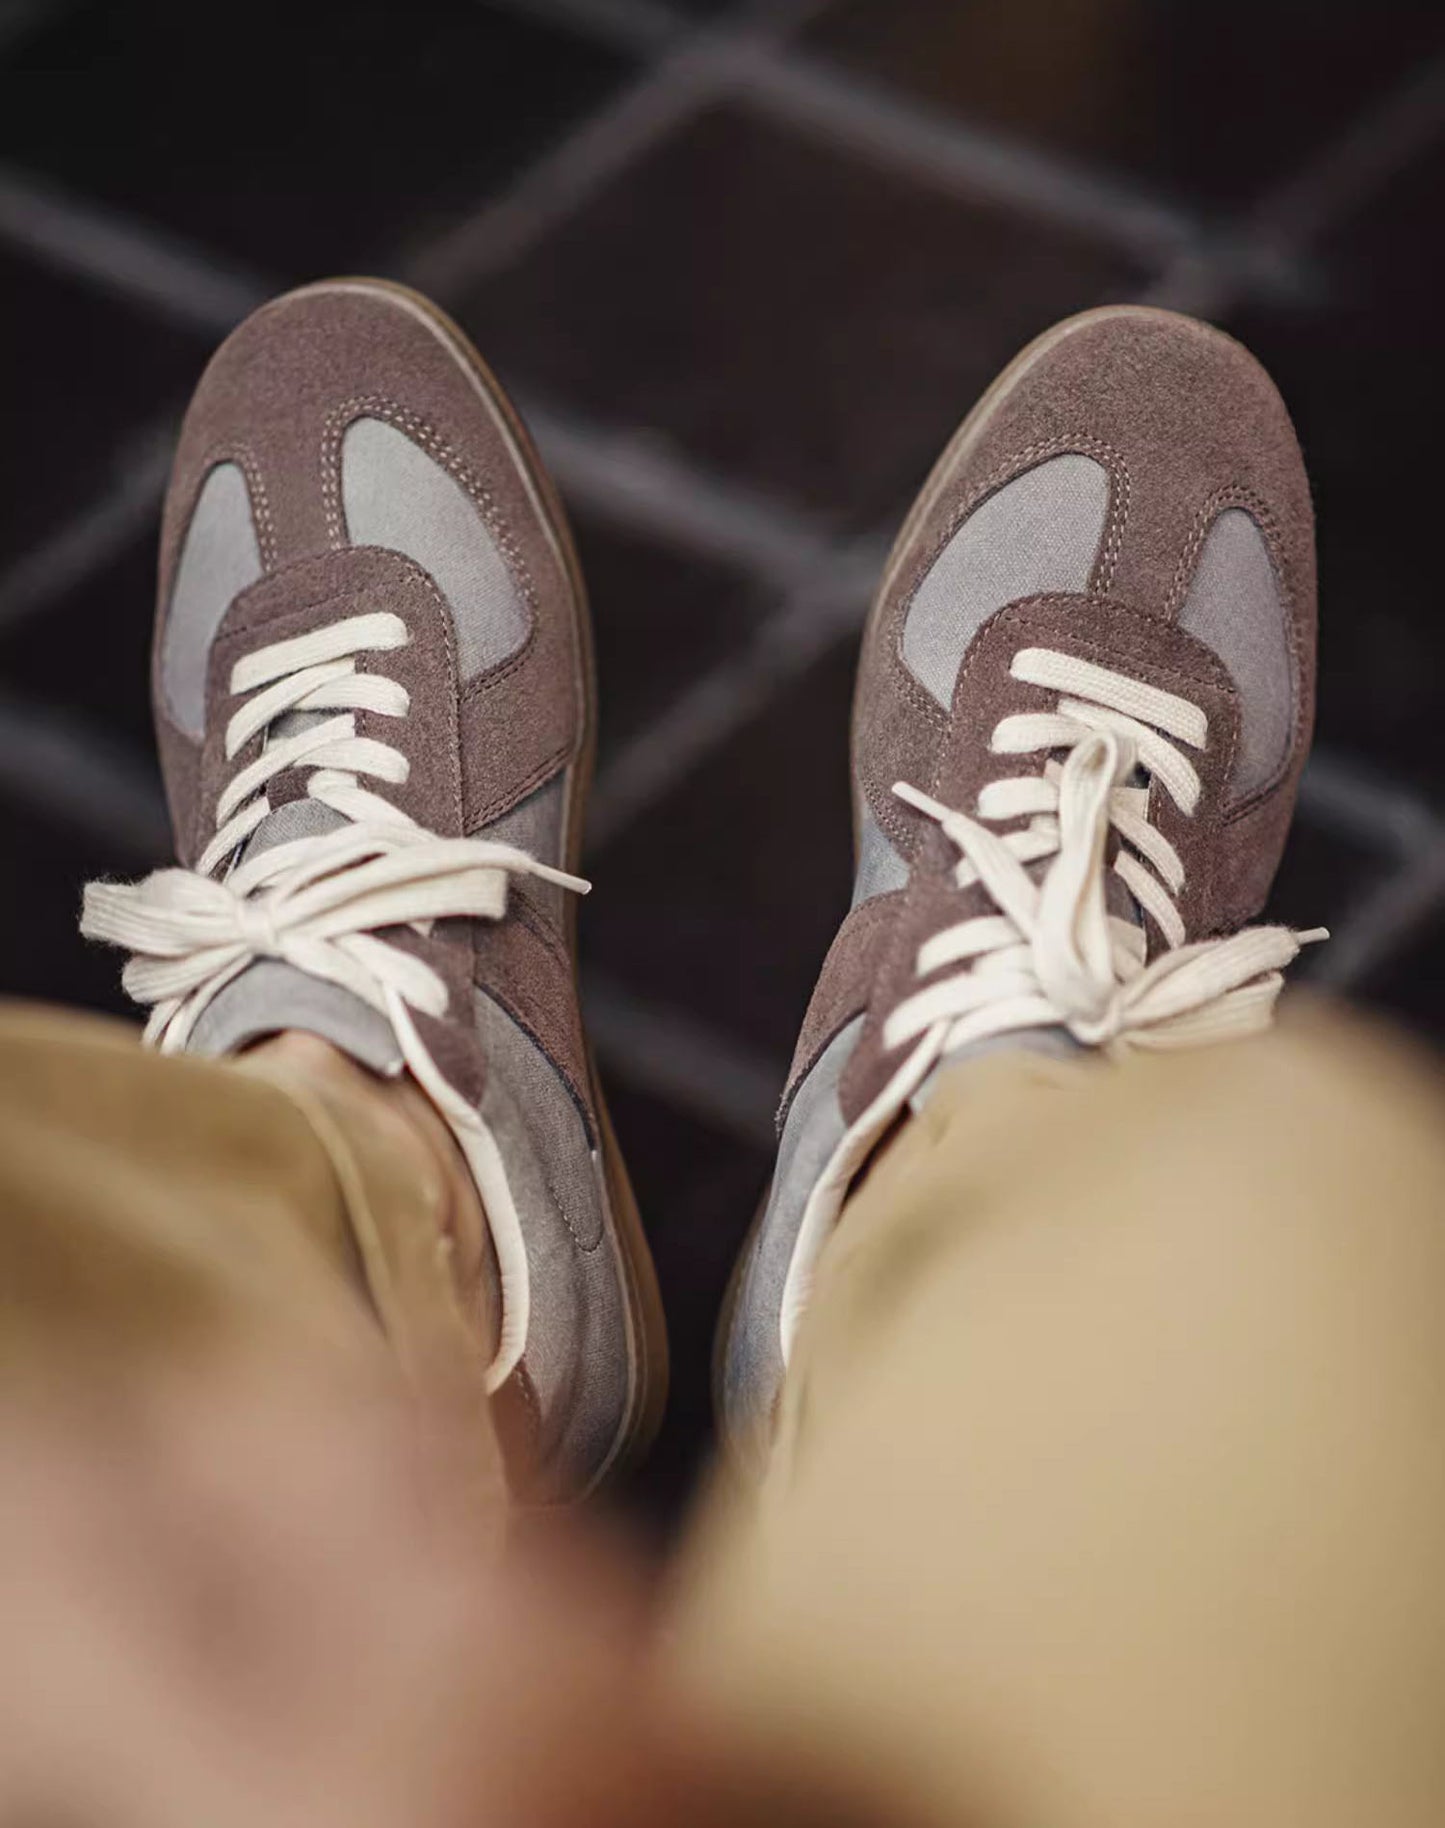 German Army Retro Flip-Up Moral Versatile Sports Men's Casual Shoes